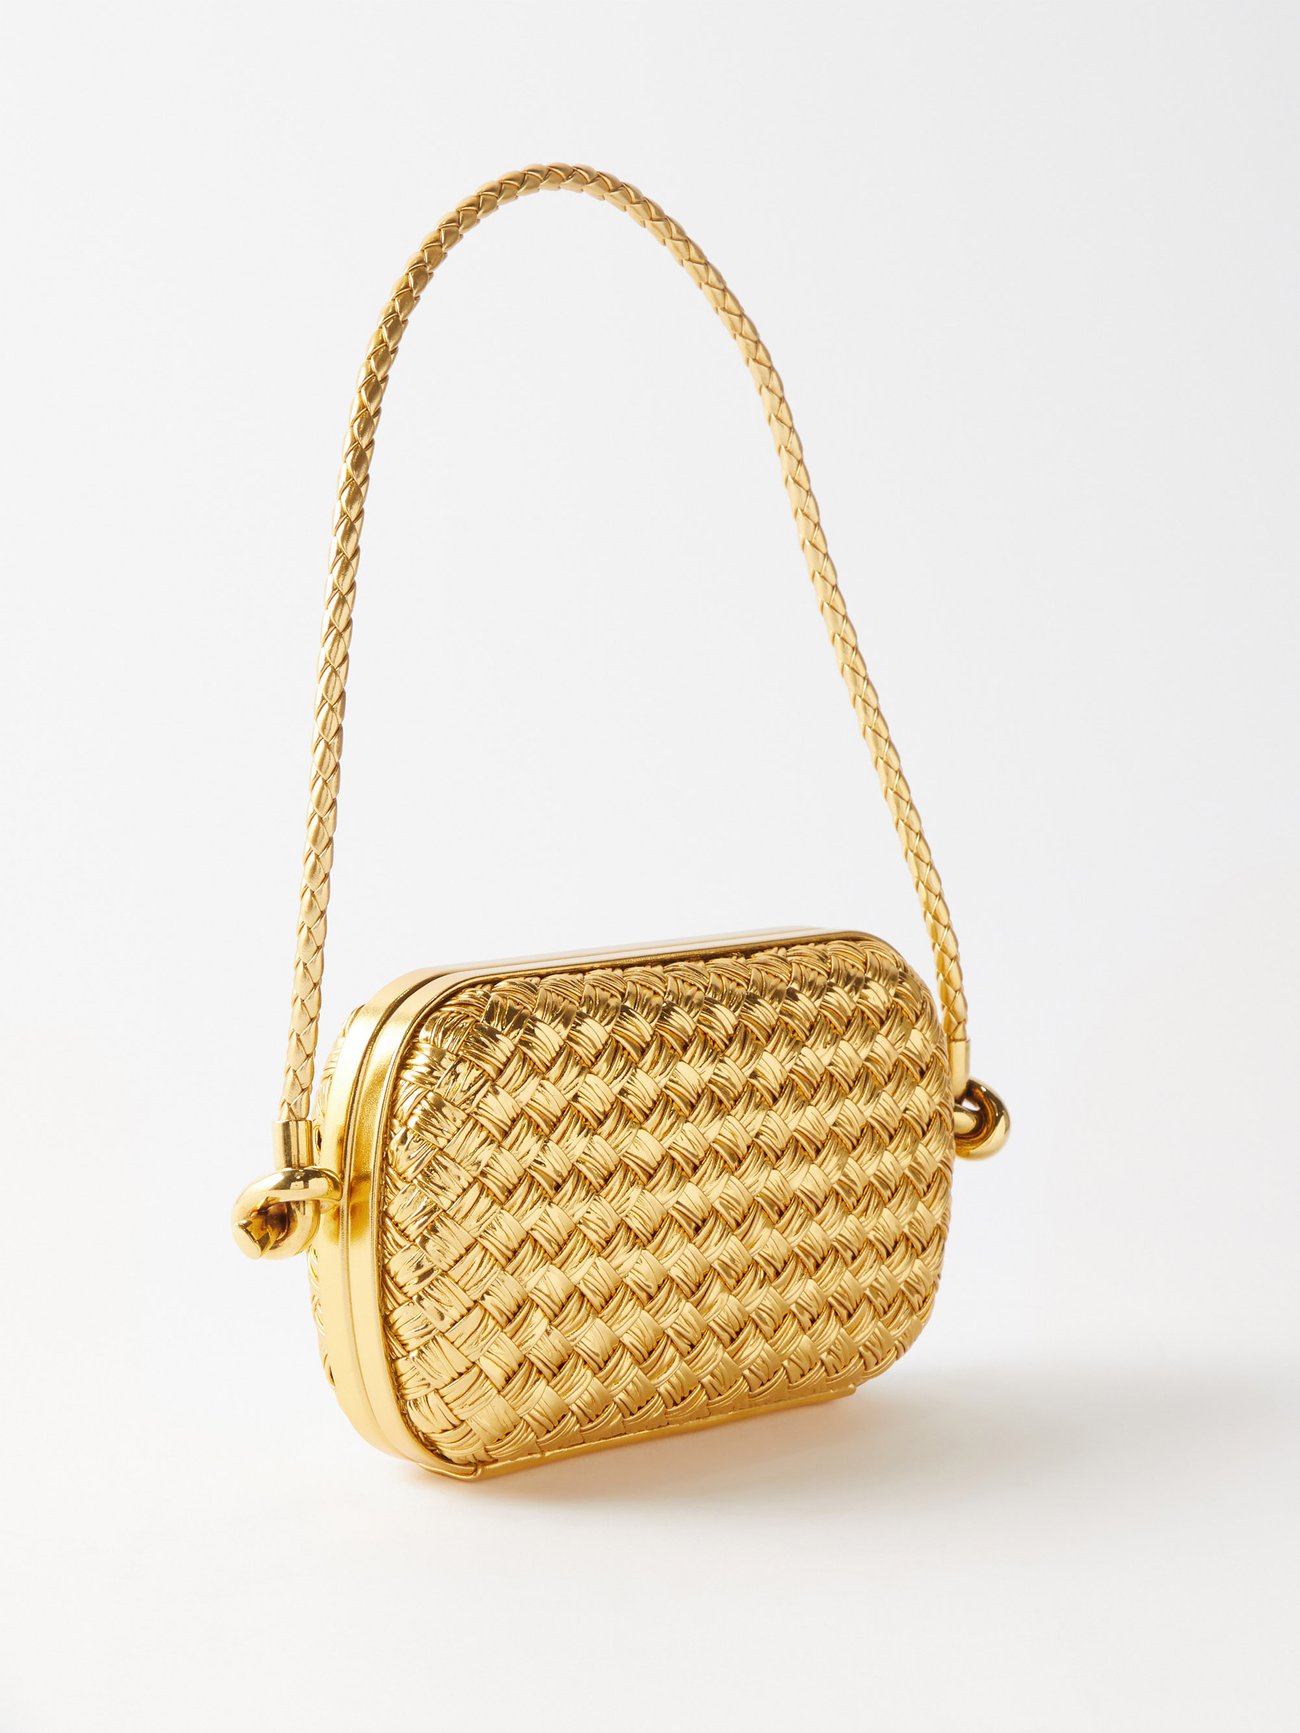 Bottega Veneta Knot Clutch in Metallic Intreccio Leather Gold